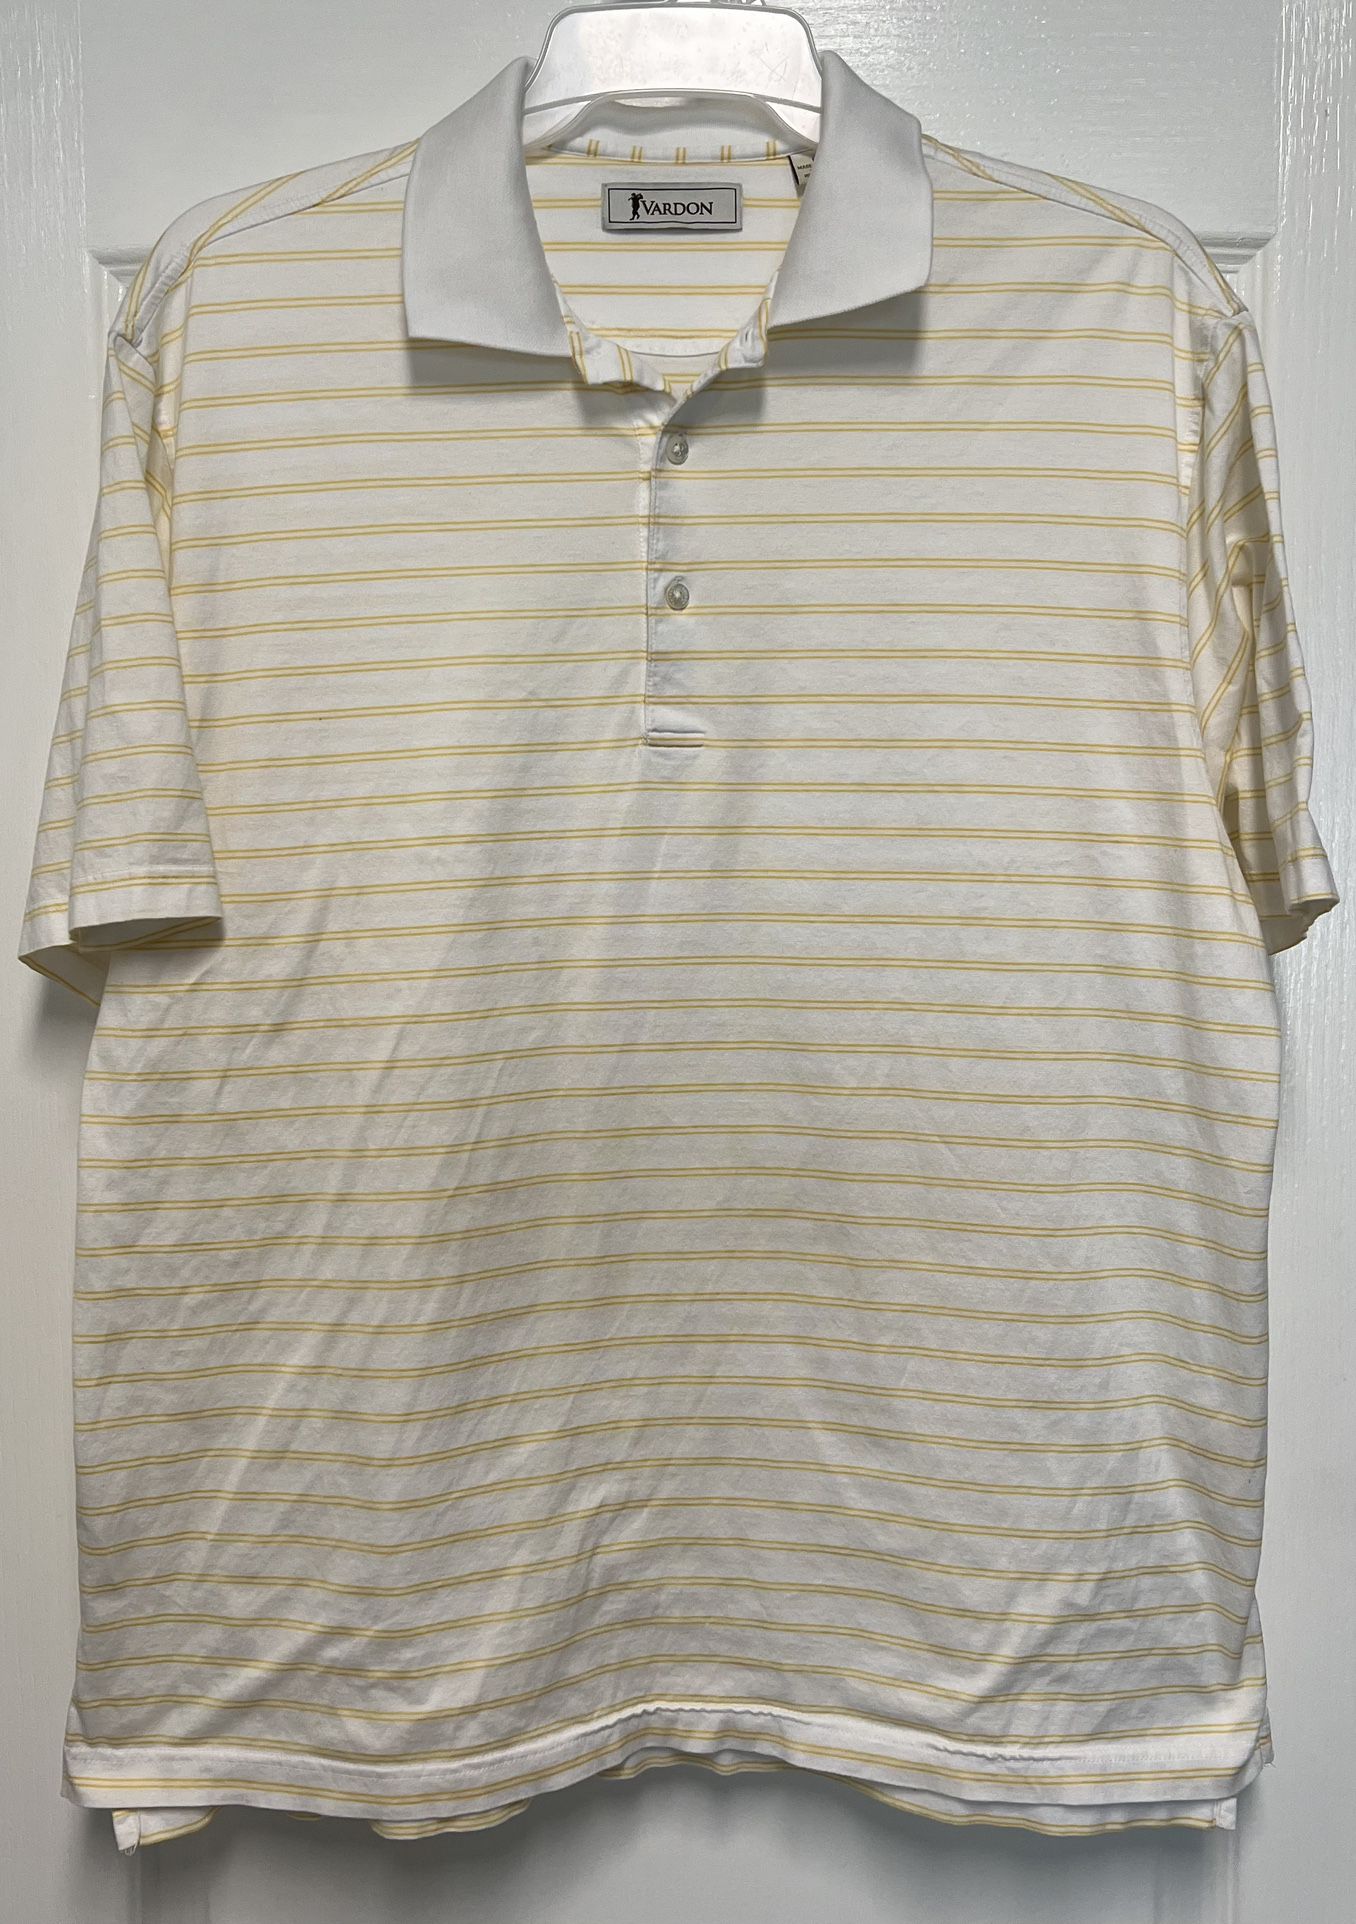 Harry Vardon Polo Shirt Adult Large Striped Golf Club Mens